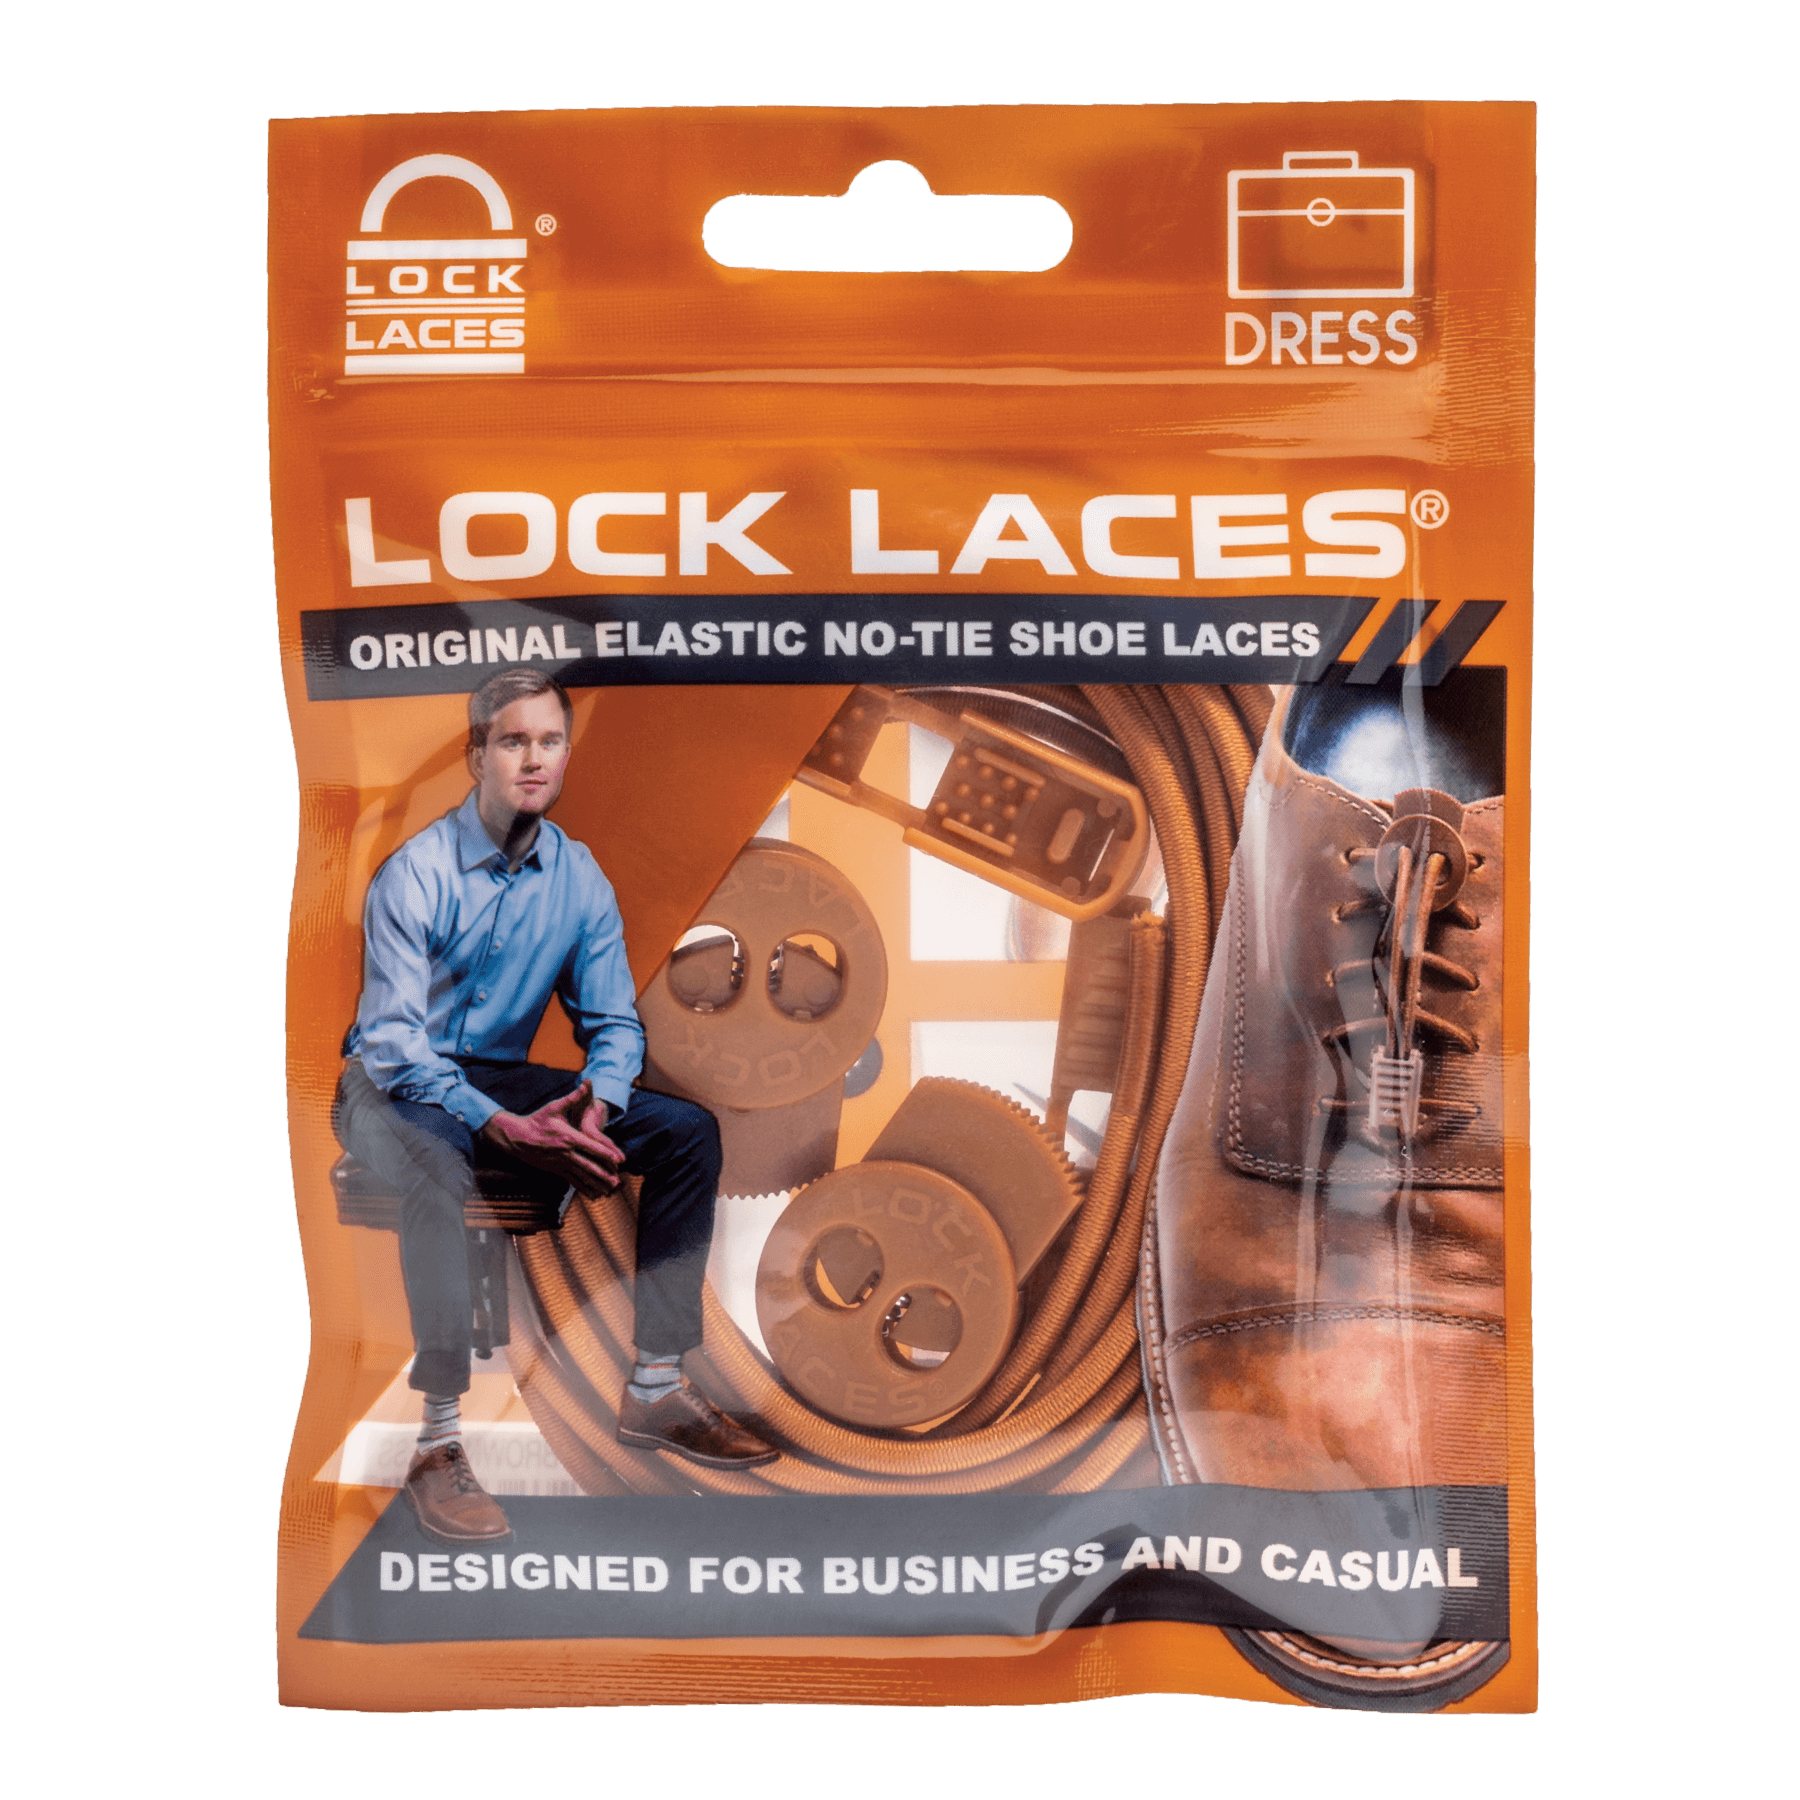 Lock Laces- The Original Elastic No-Tie Laces